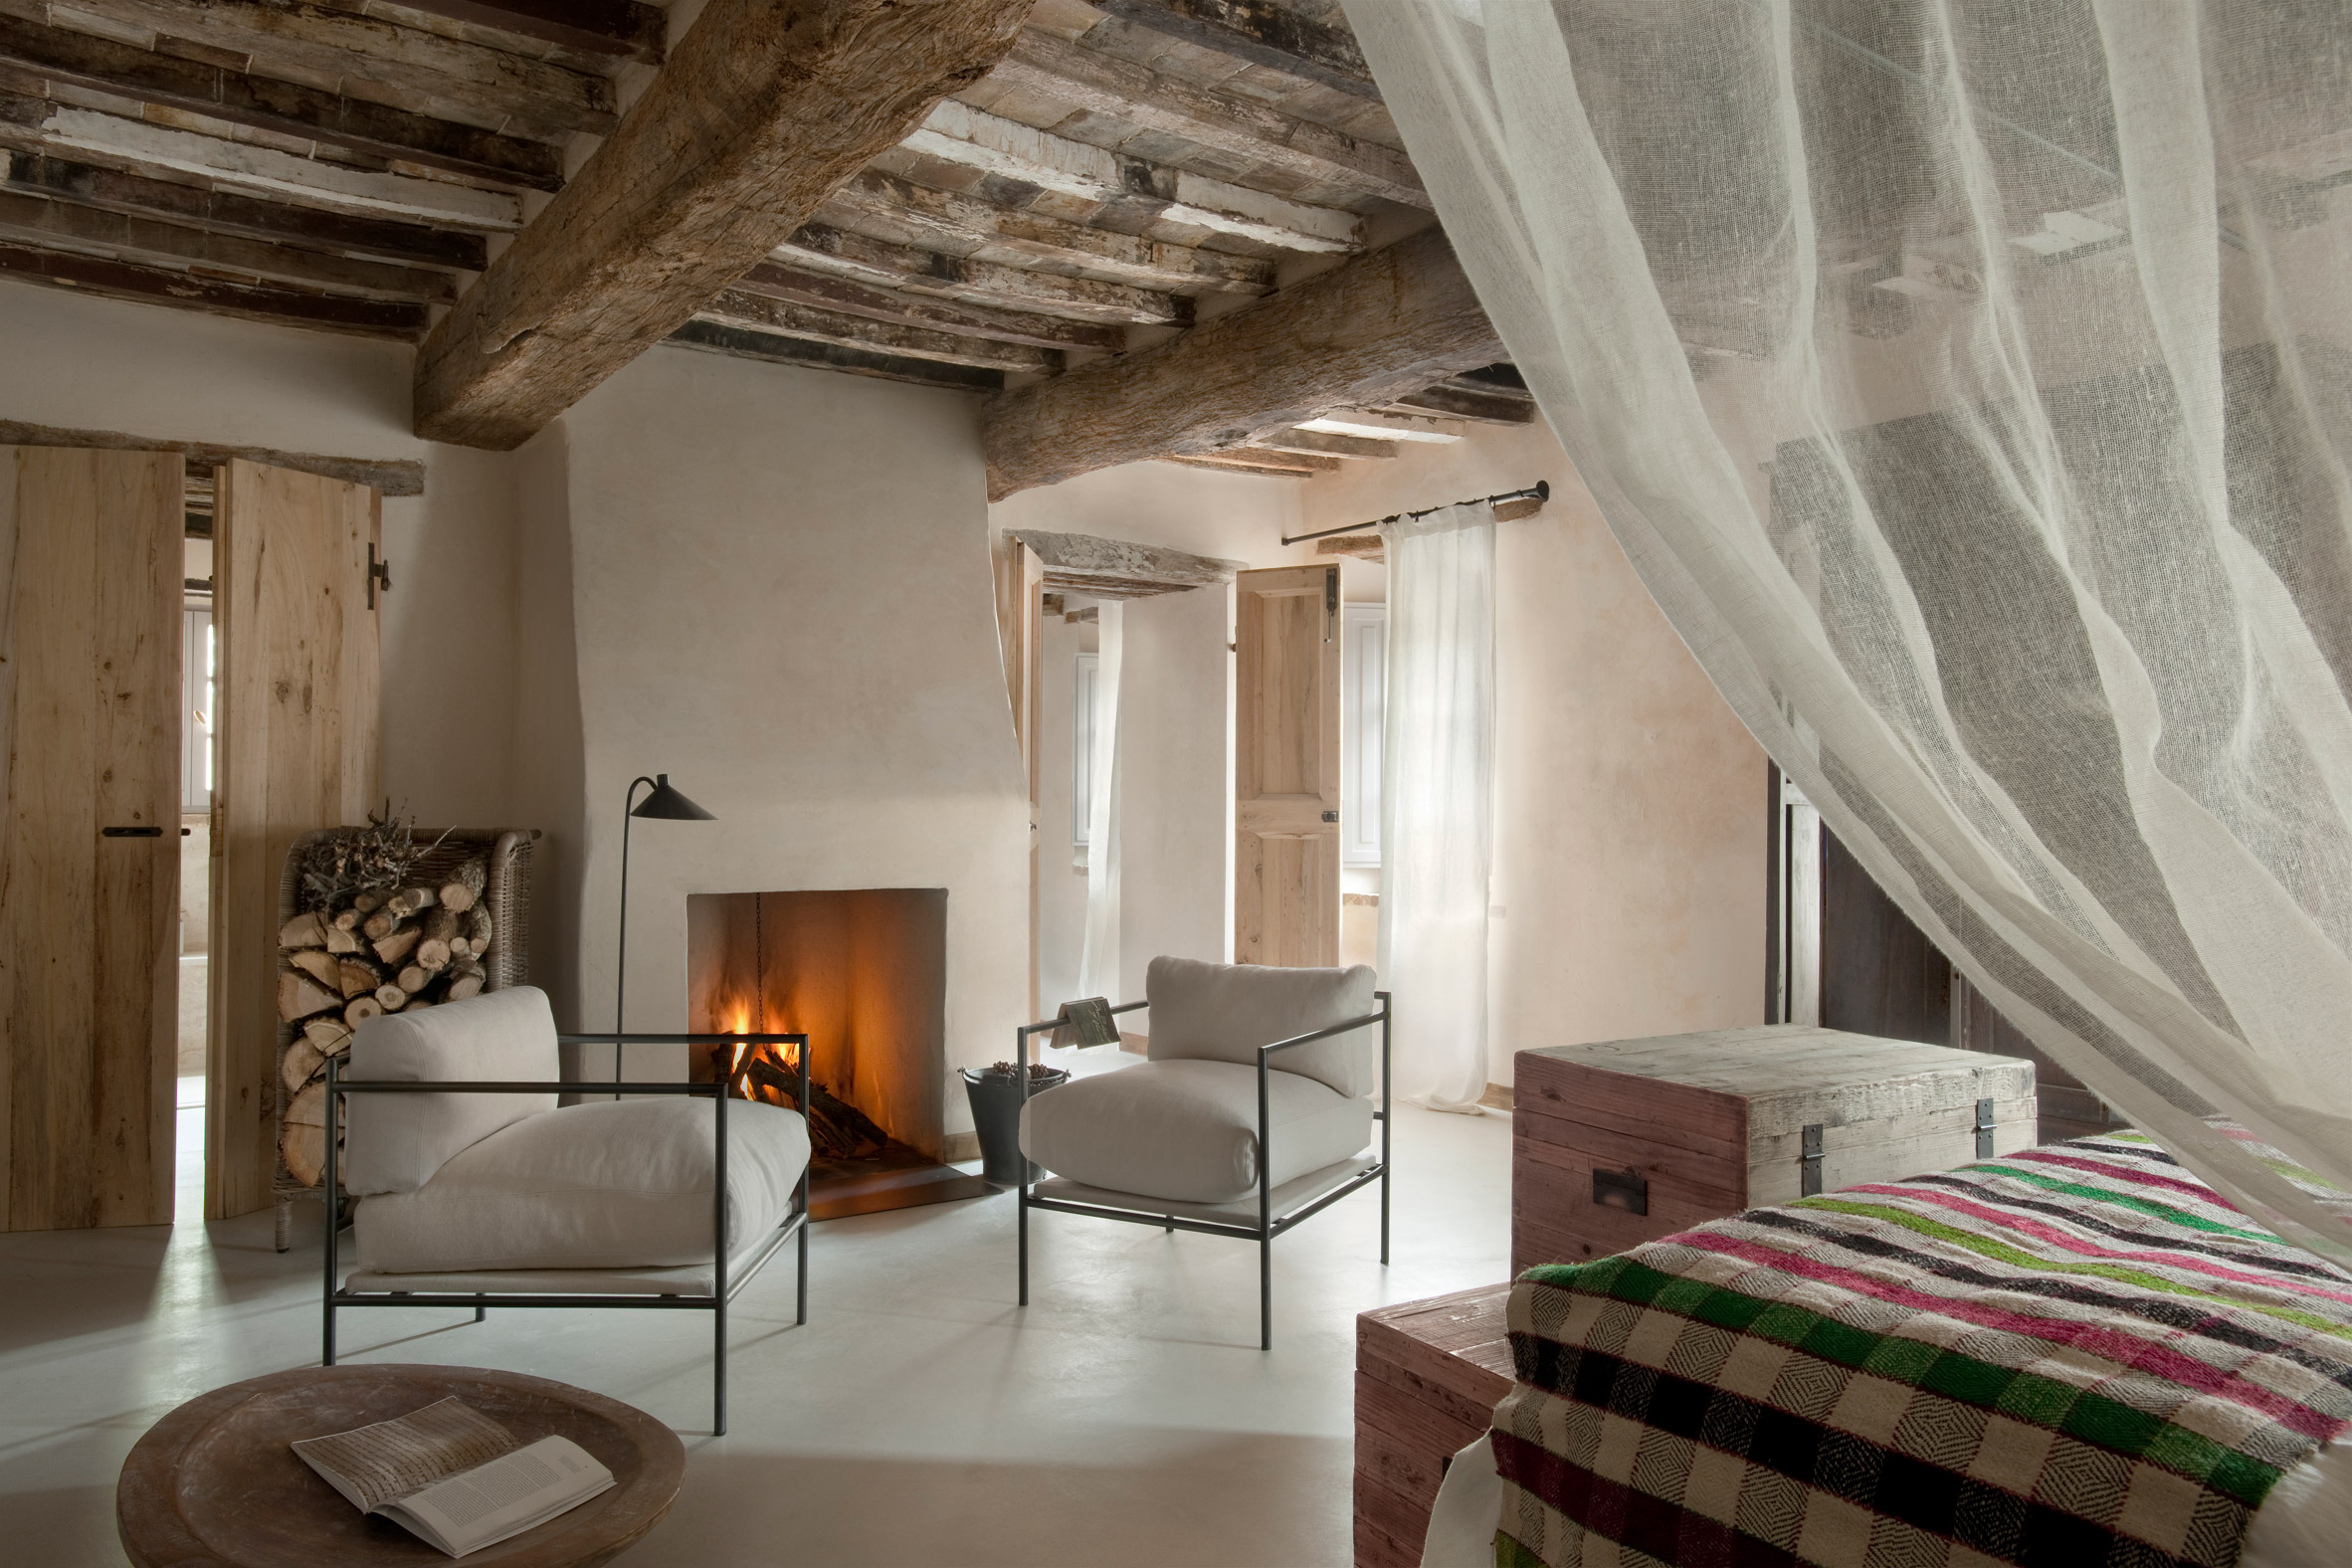 Monteverdi Tuscany boutique hotel by Michael Cioffi and Ilaria Miani